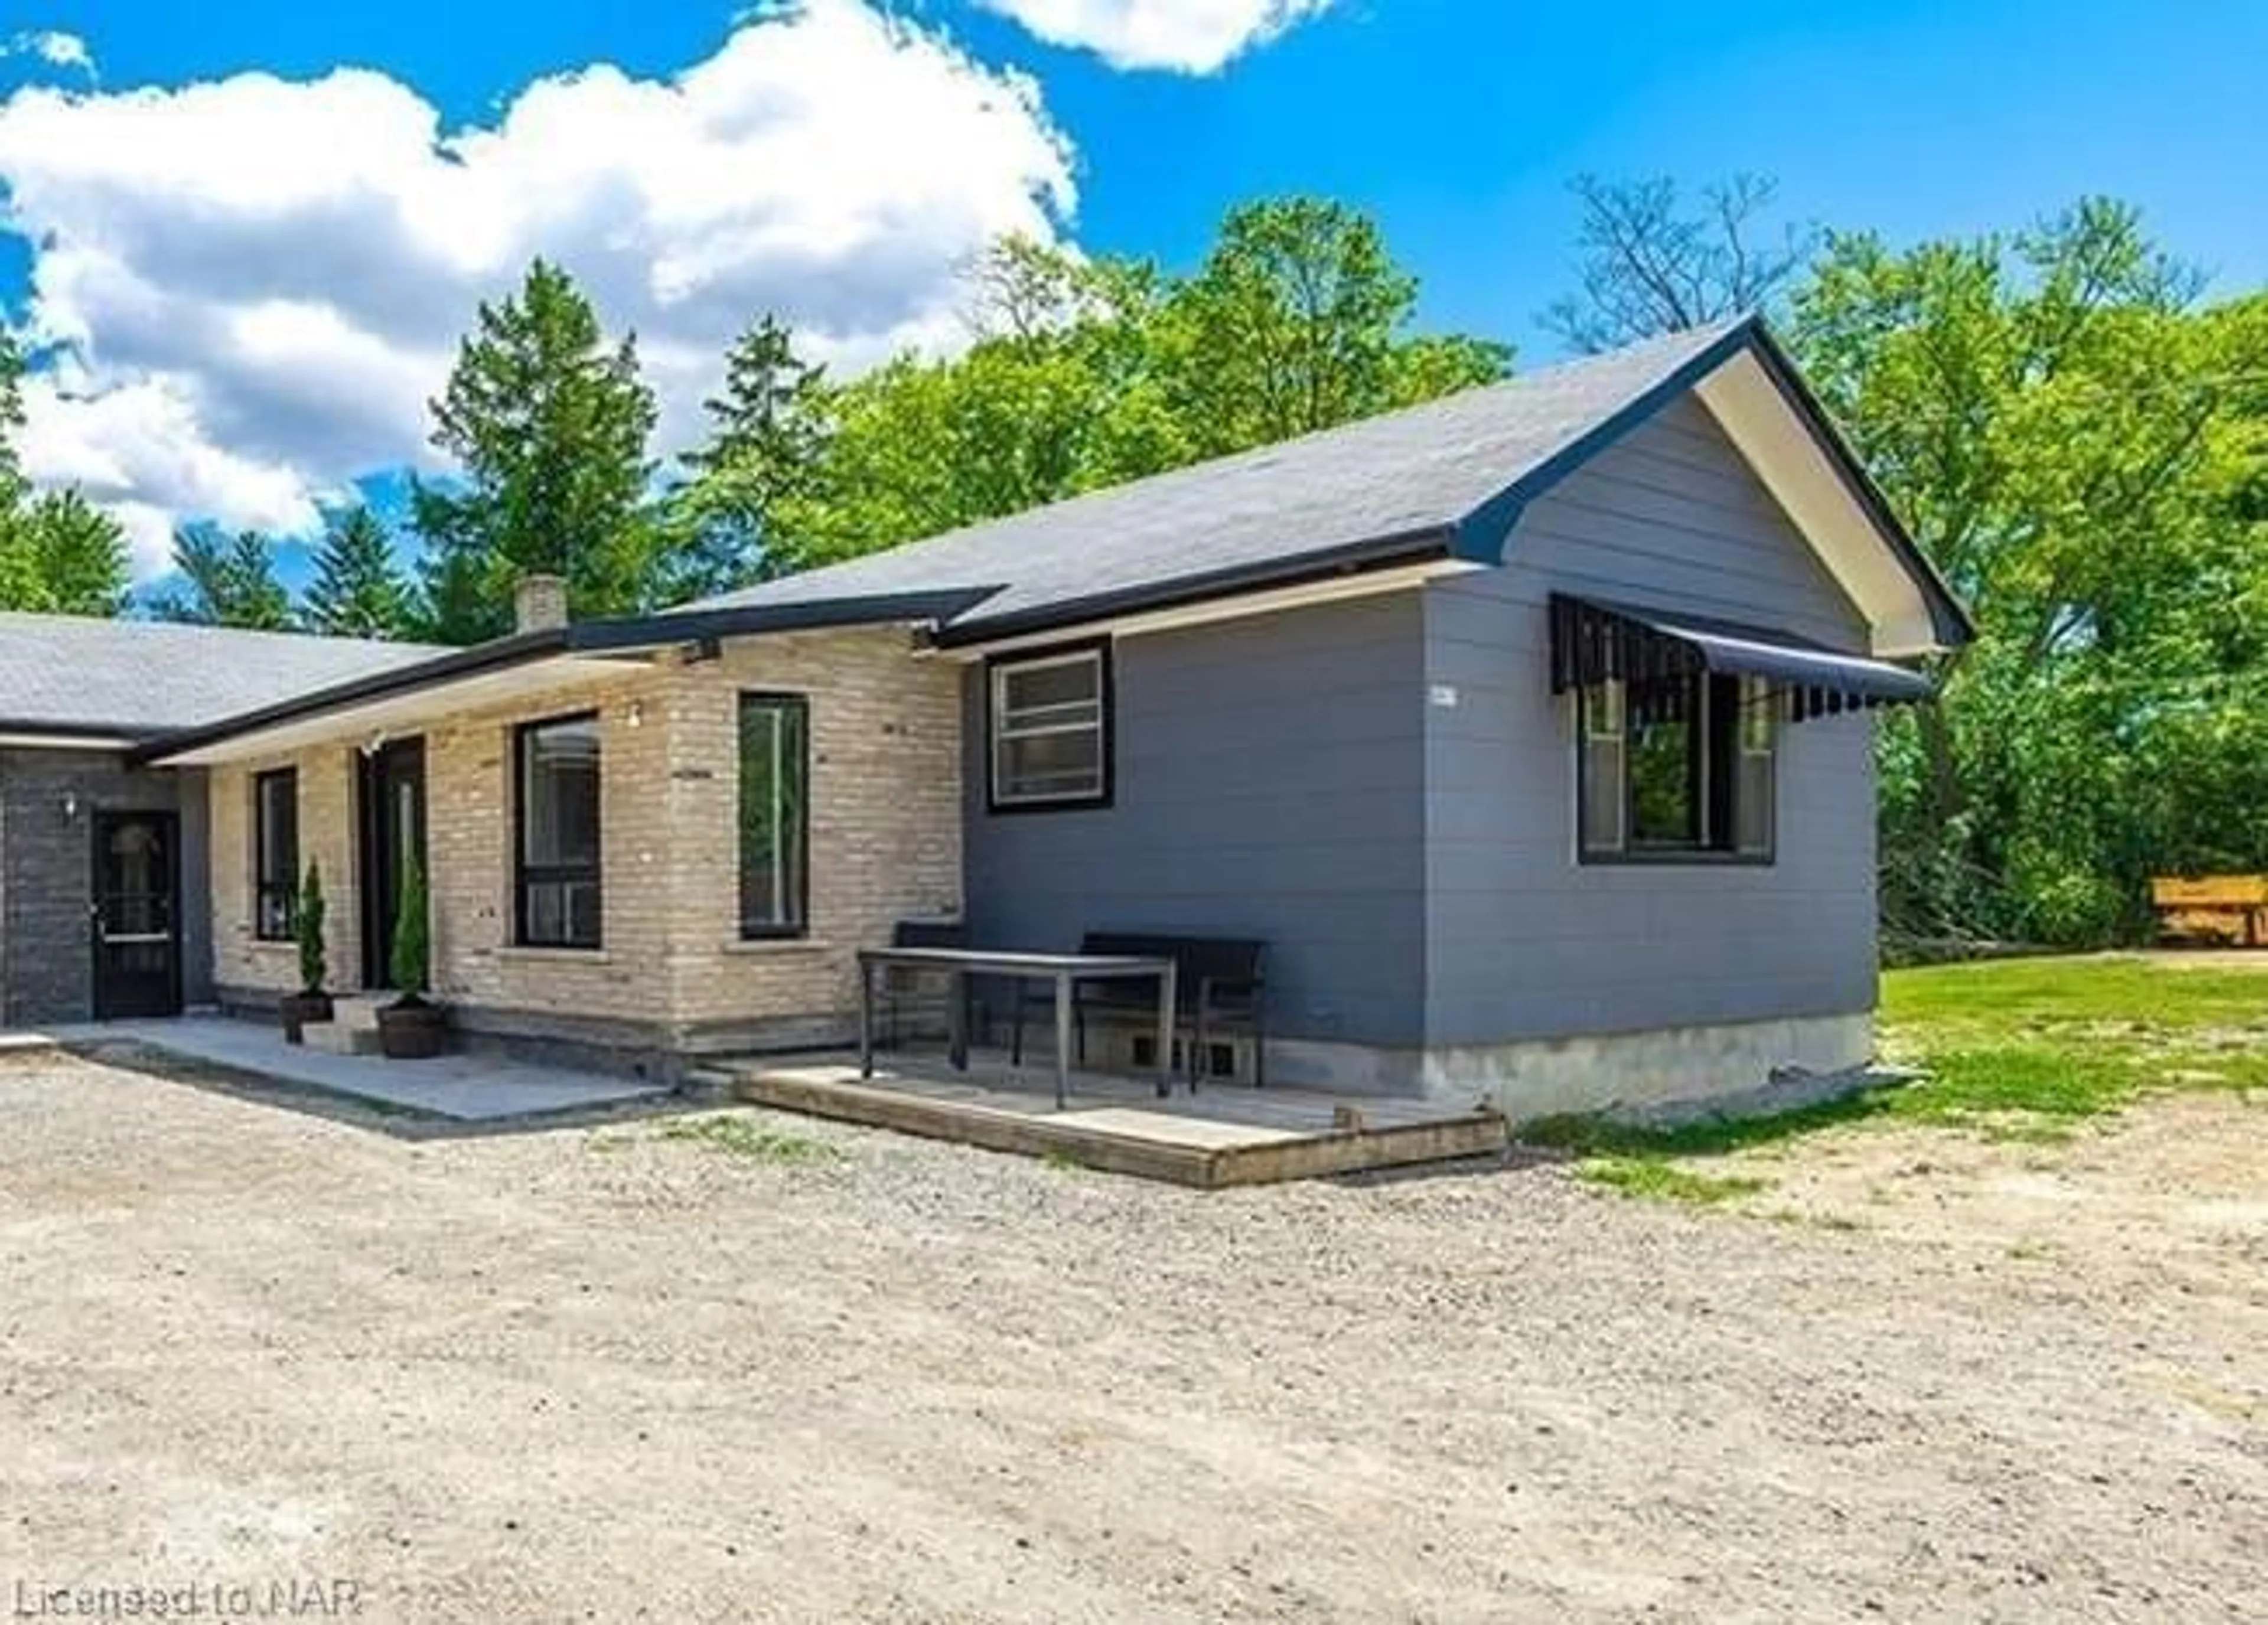 Cottage for 3471 Elm St, Port Colborne Ontario L3K 5V5